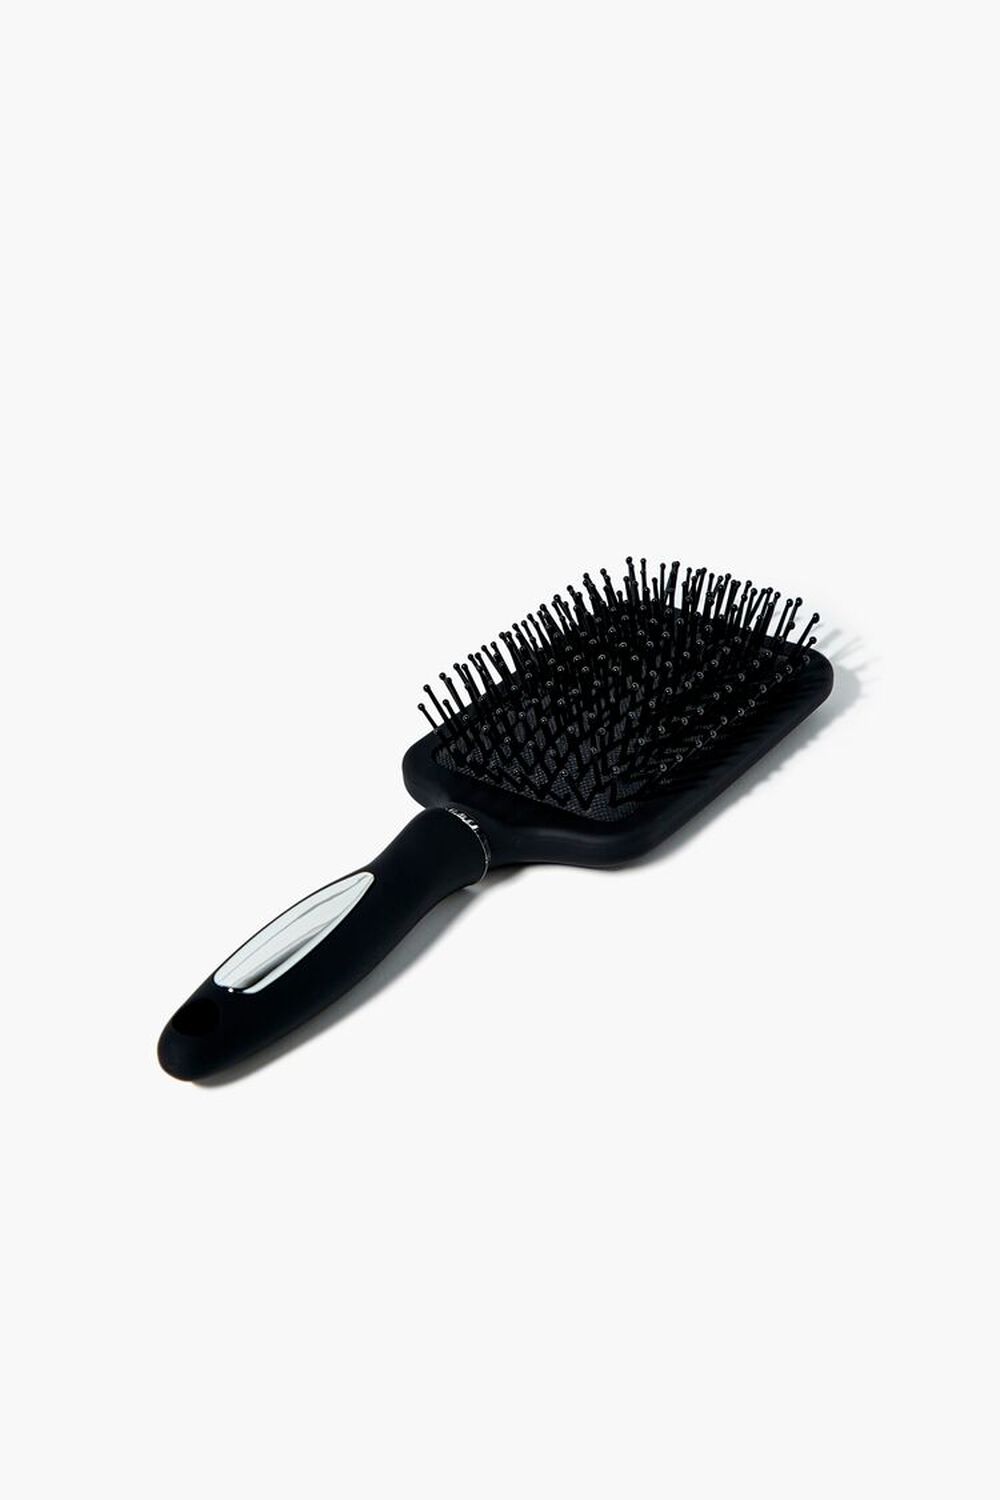 BLACK/SILVER Ball-Tip Hair Brush, image 1